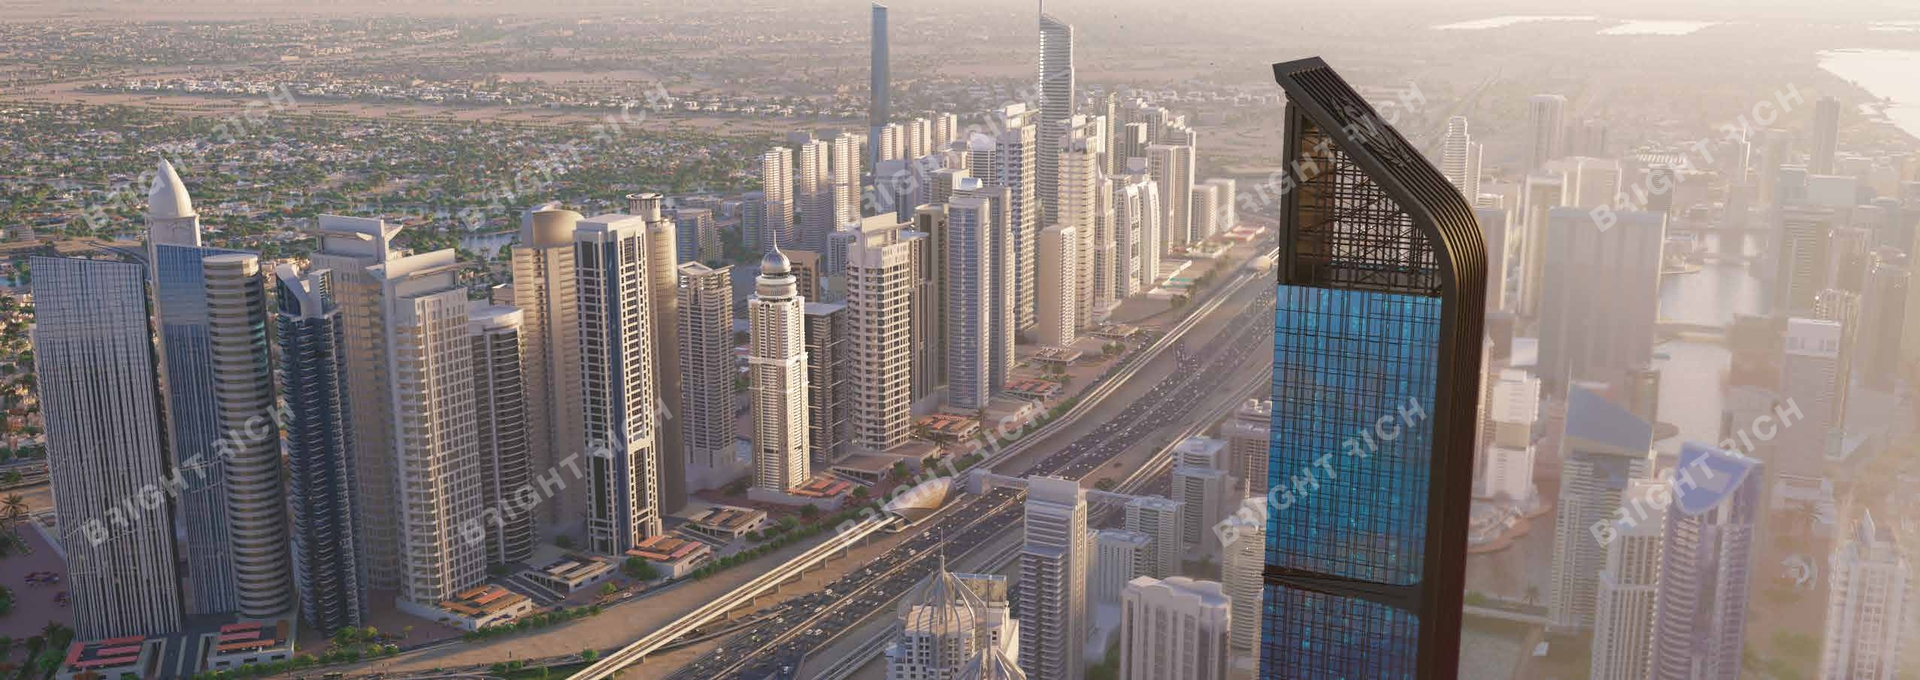 Aeternitas by Franck Muller, apart complex in Dubai - 4